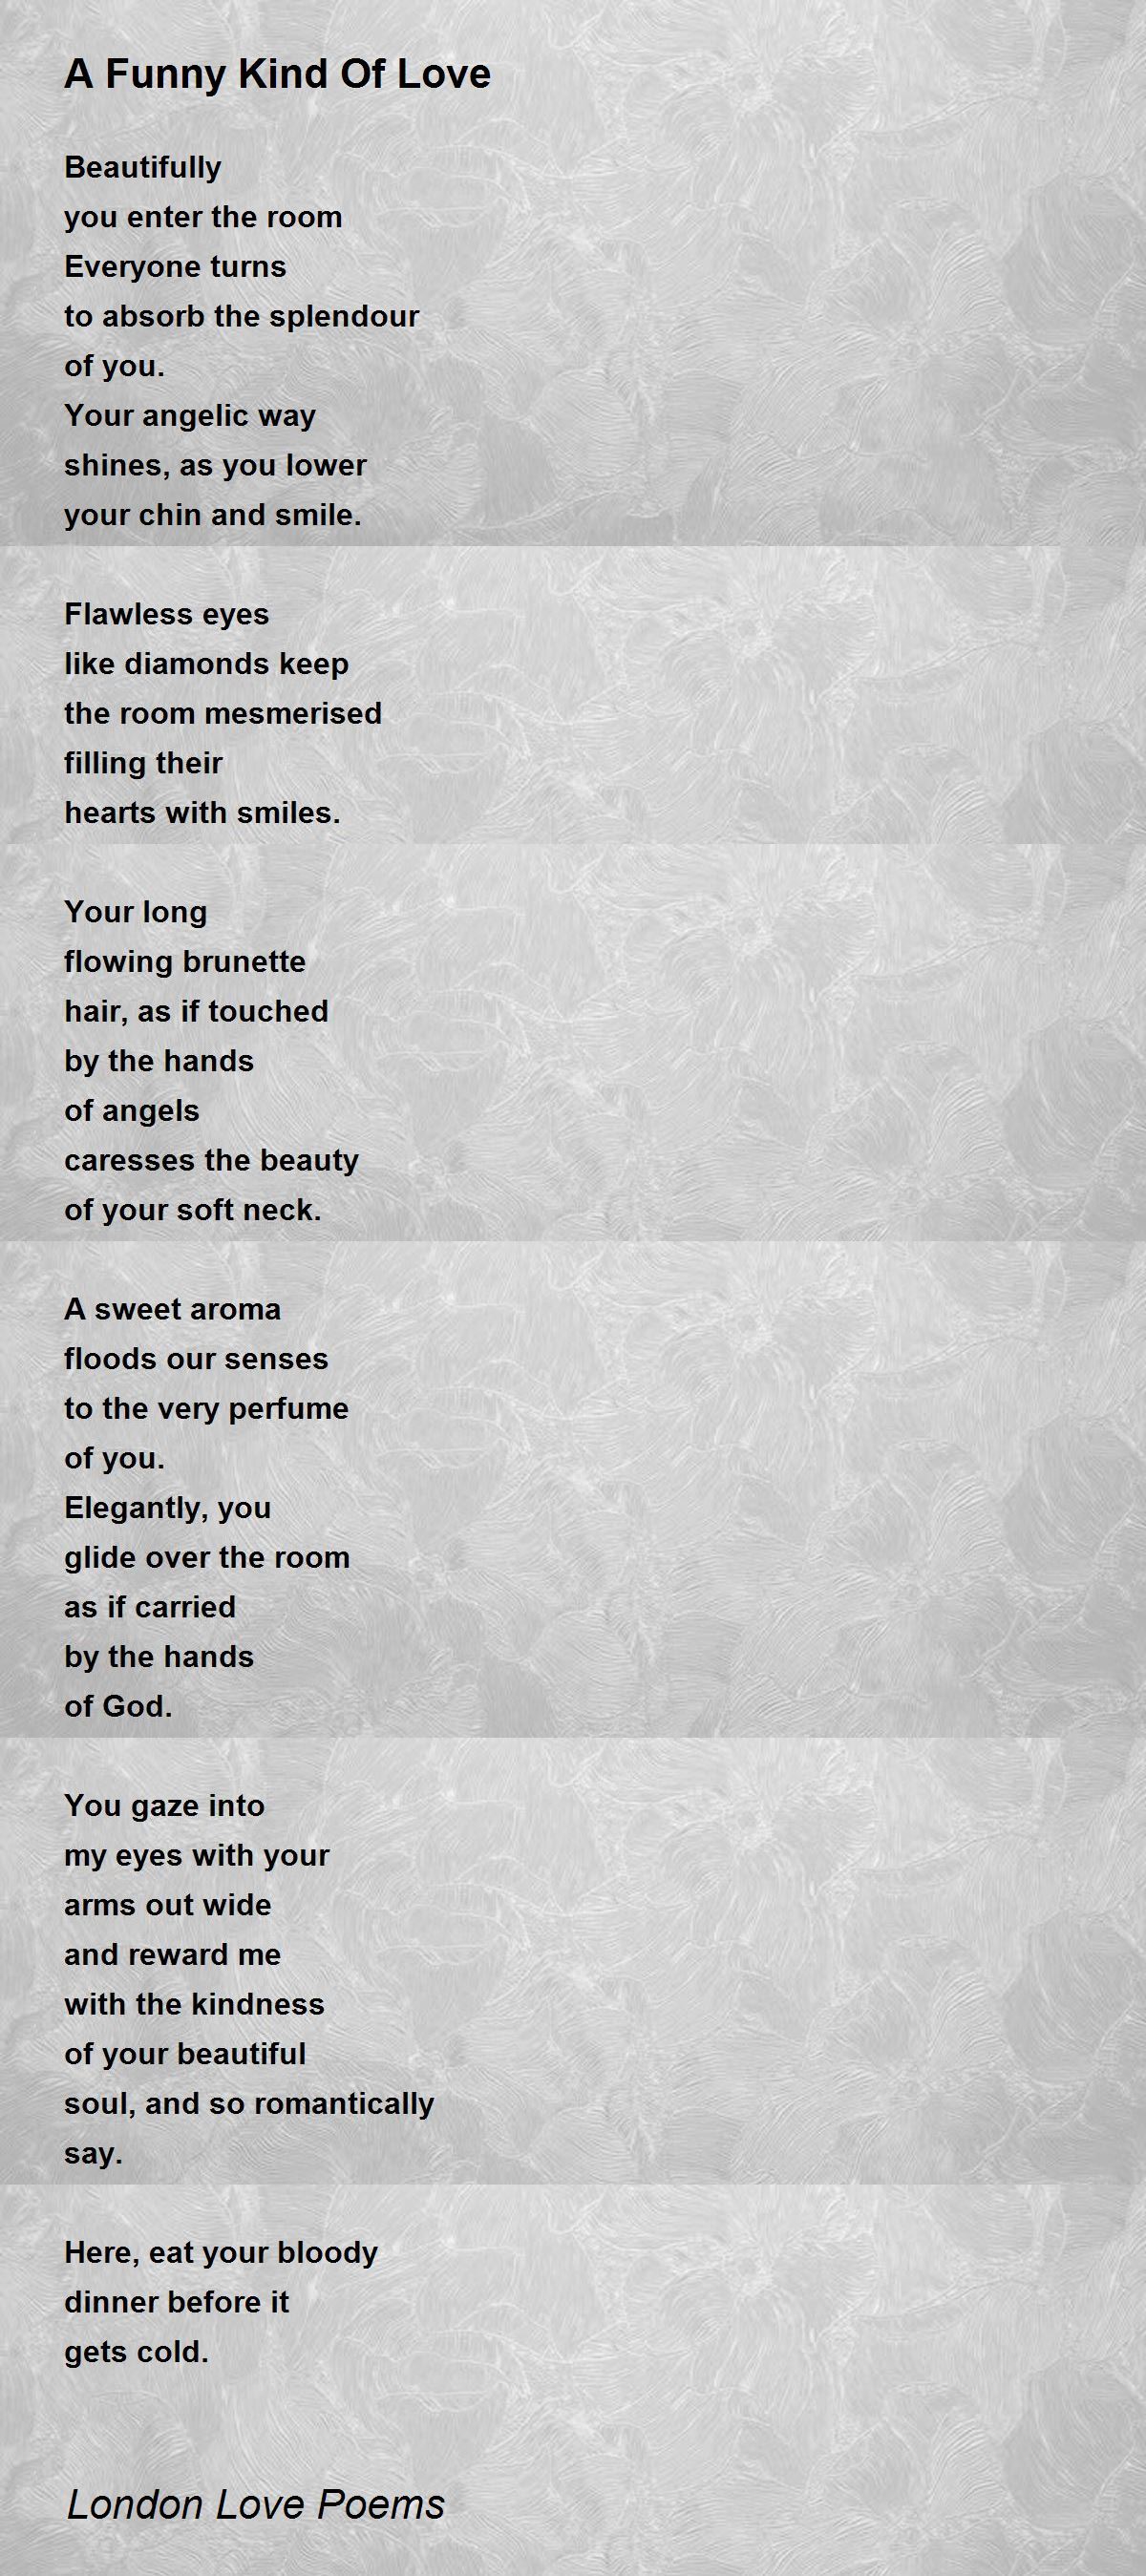 A Funny Kind Of Love - A Funny Kind Of Love Poem by London Love Poems